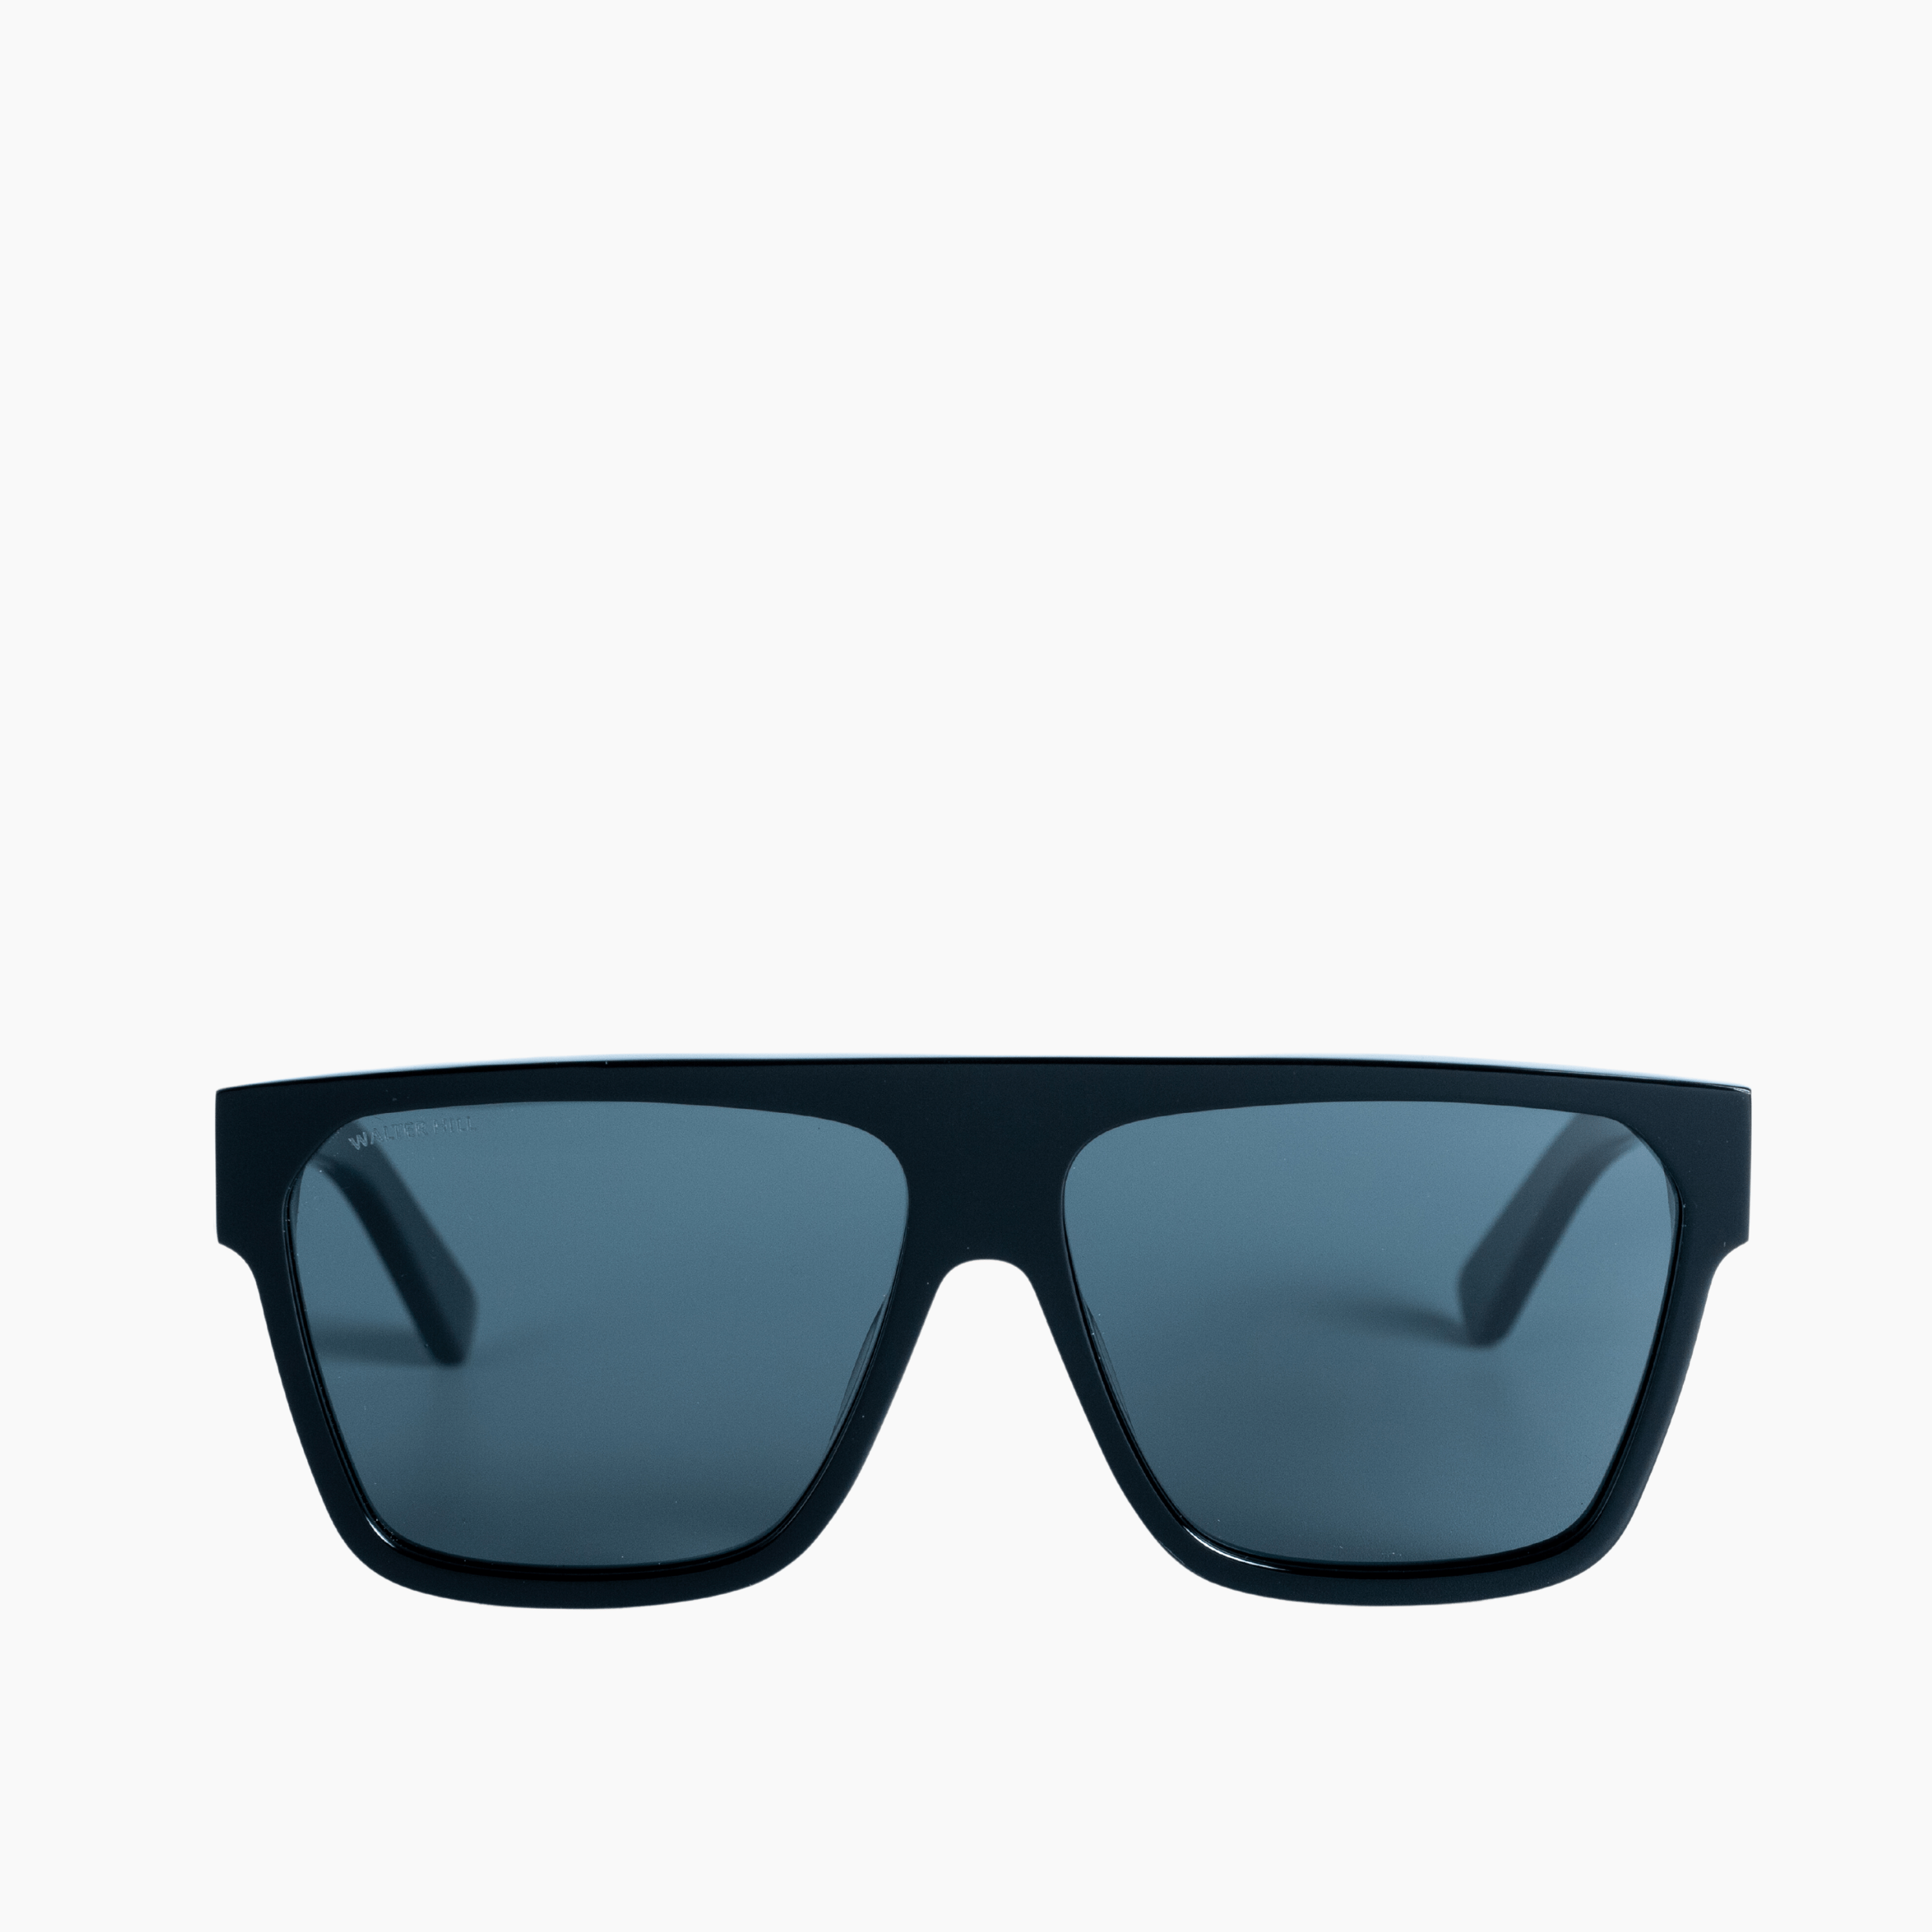 Walter Hill Sunglasses Oversized / Black / Polarized Cat.3 KAYA - Black